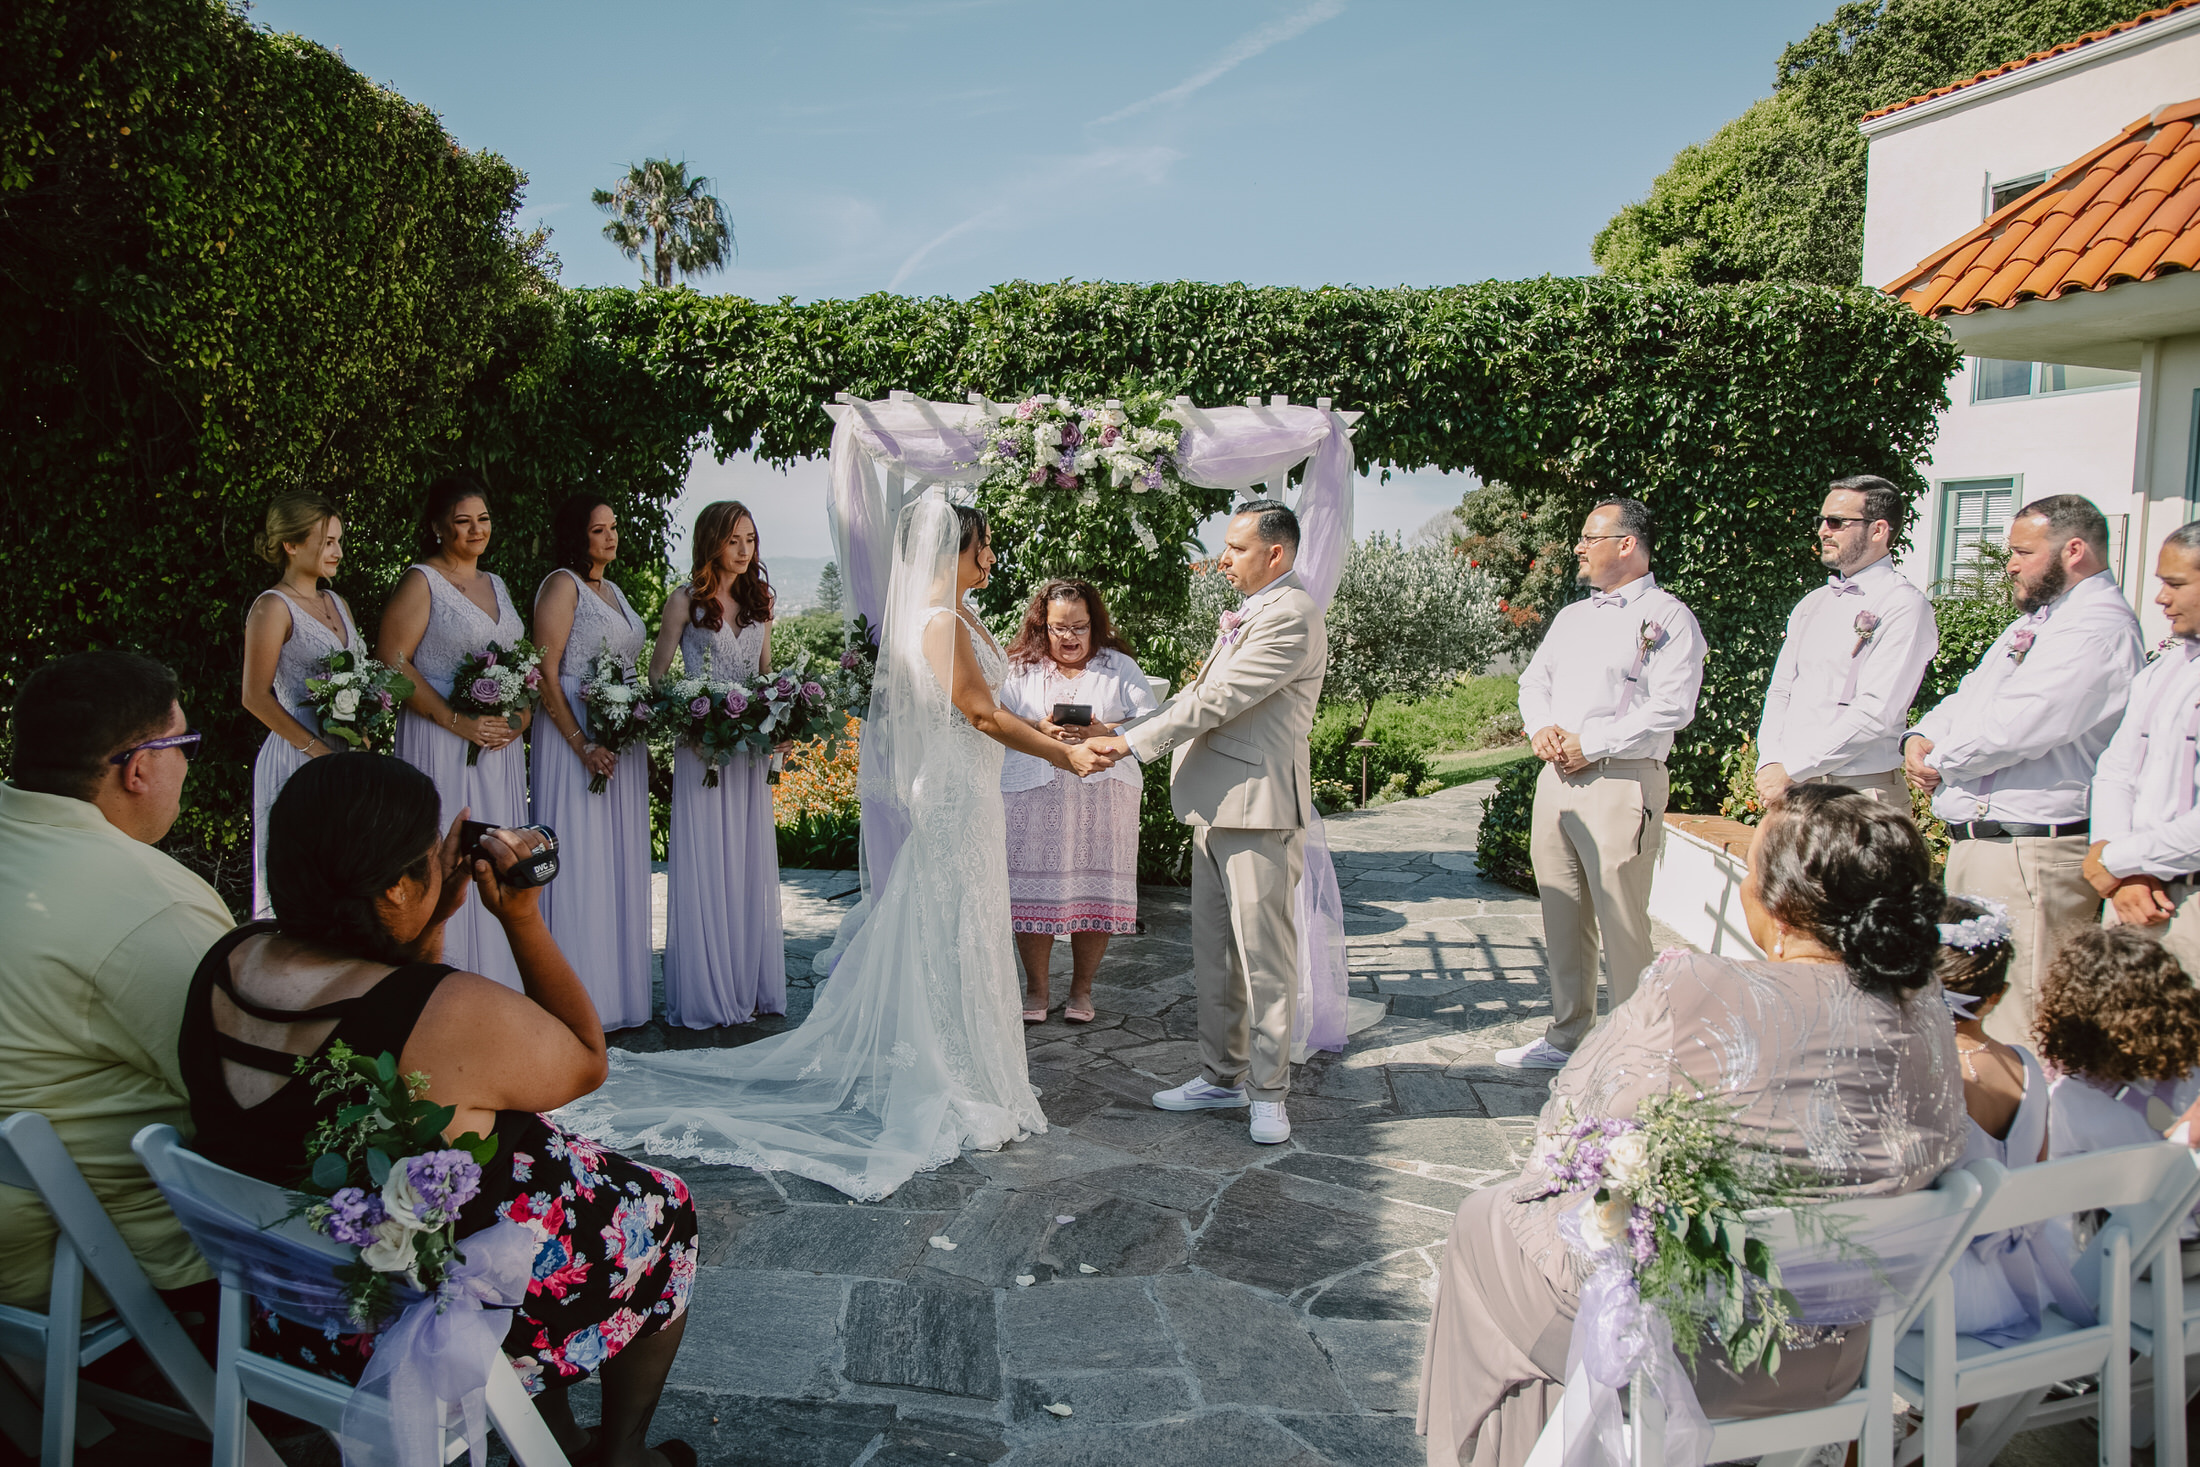 Wedding ceremony at The Thursday Club in La Jolla.